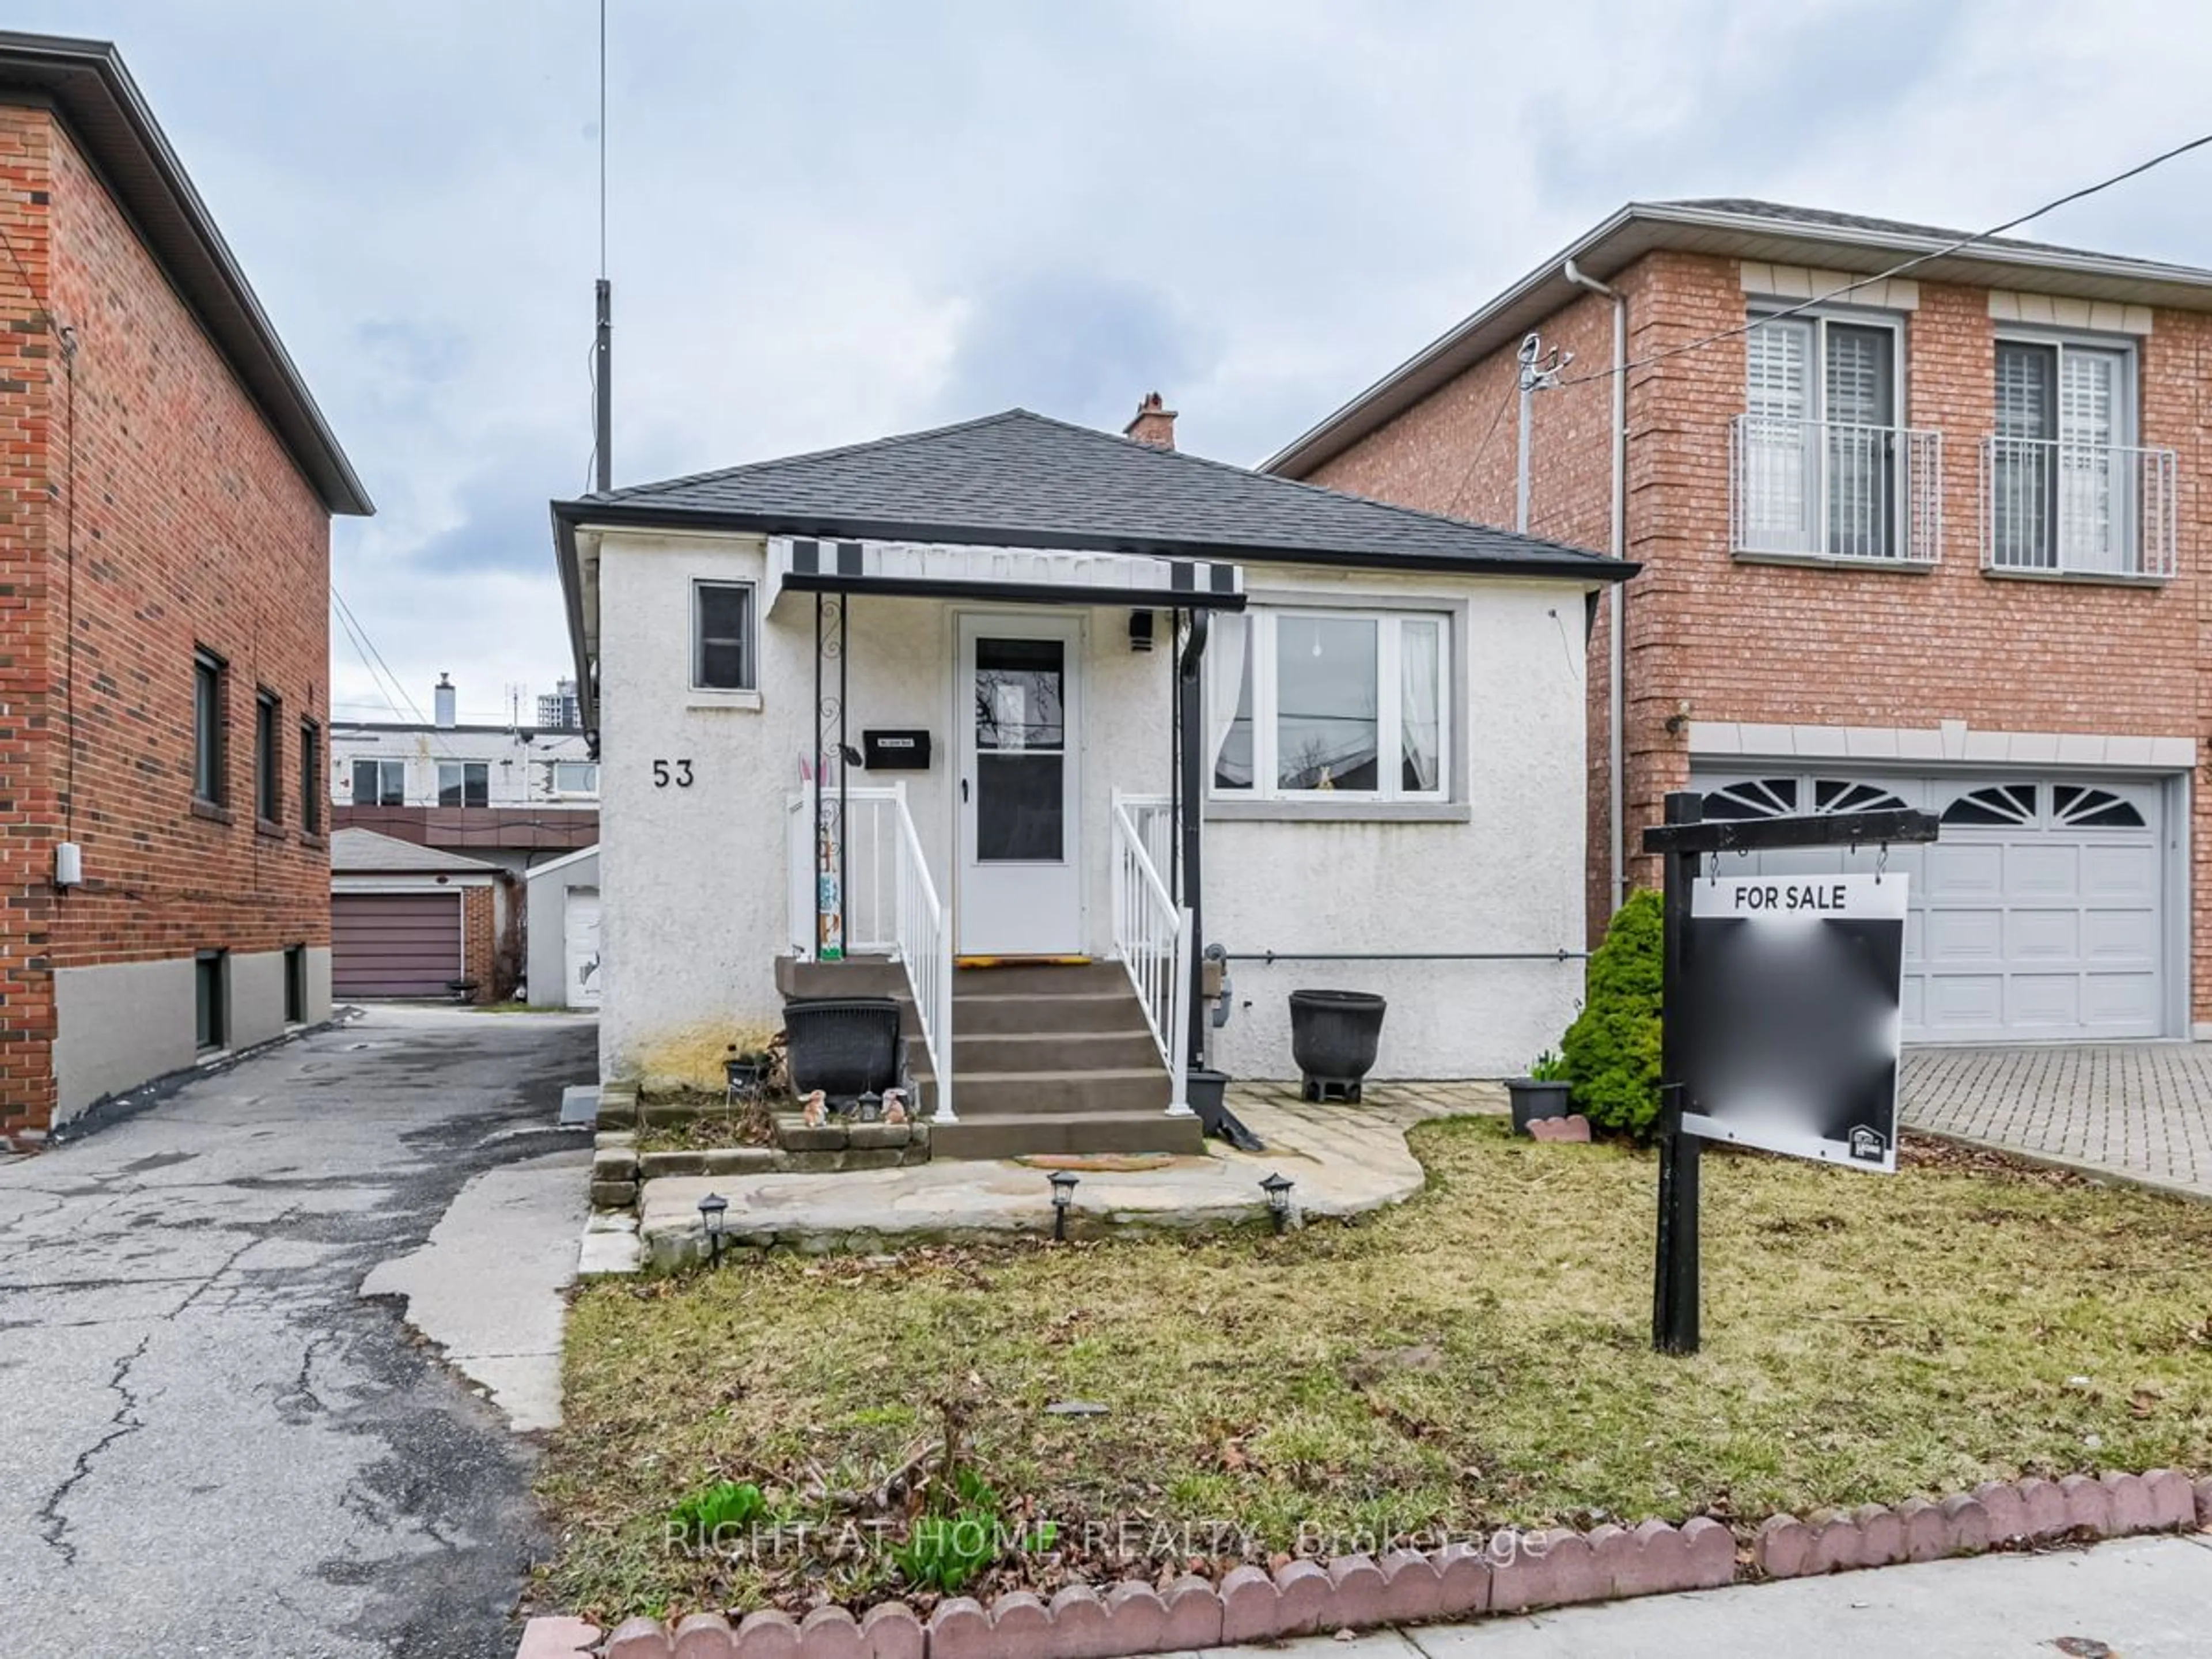 Frontside or backside of a home for 53 Regent Rd, Toronto Ontario M3K 1G8